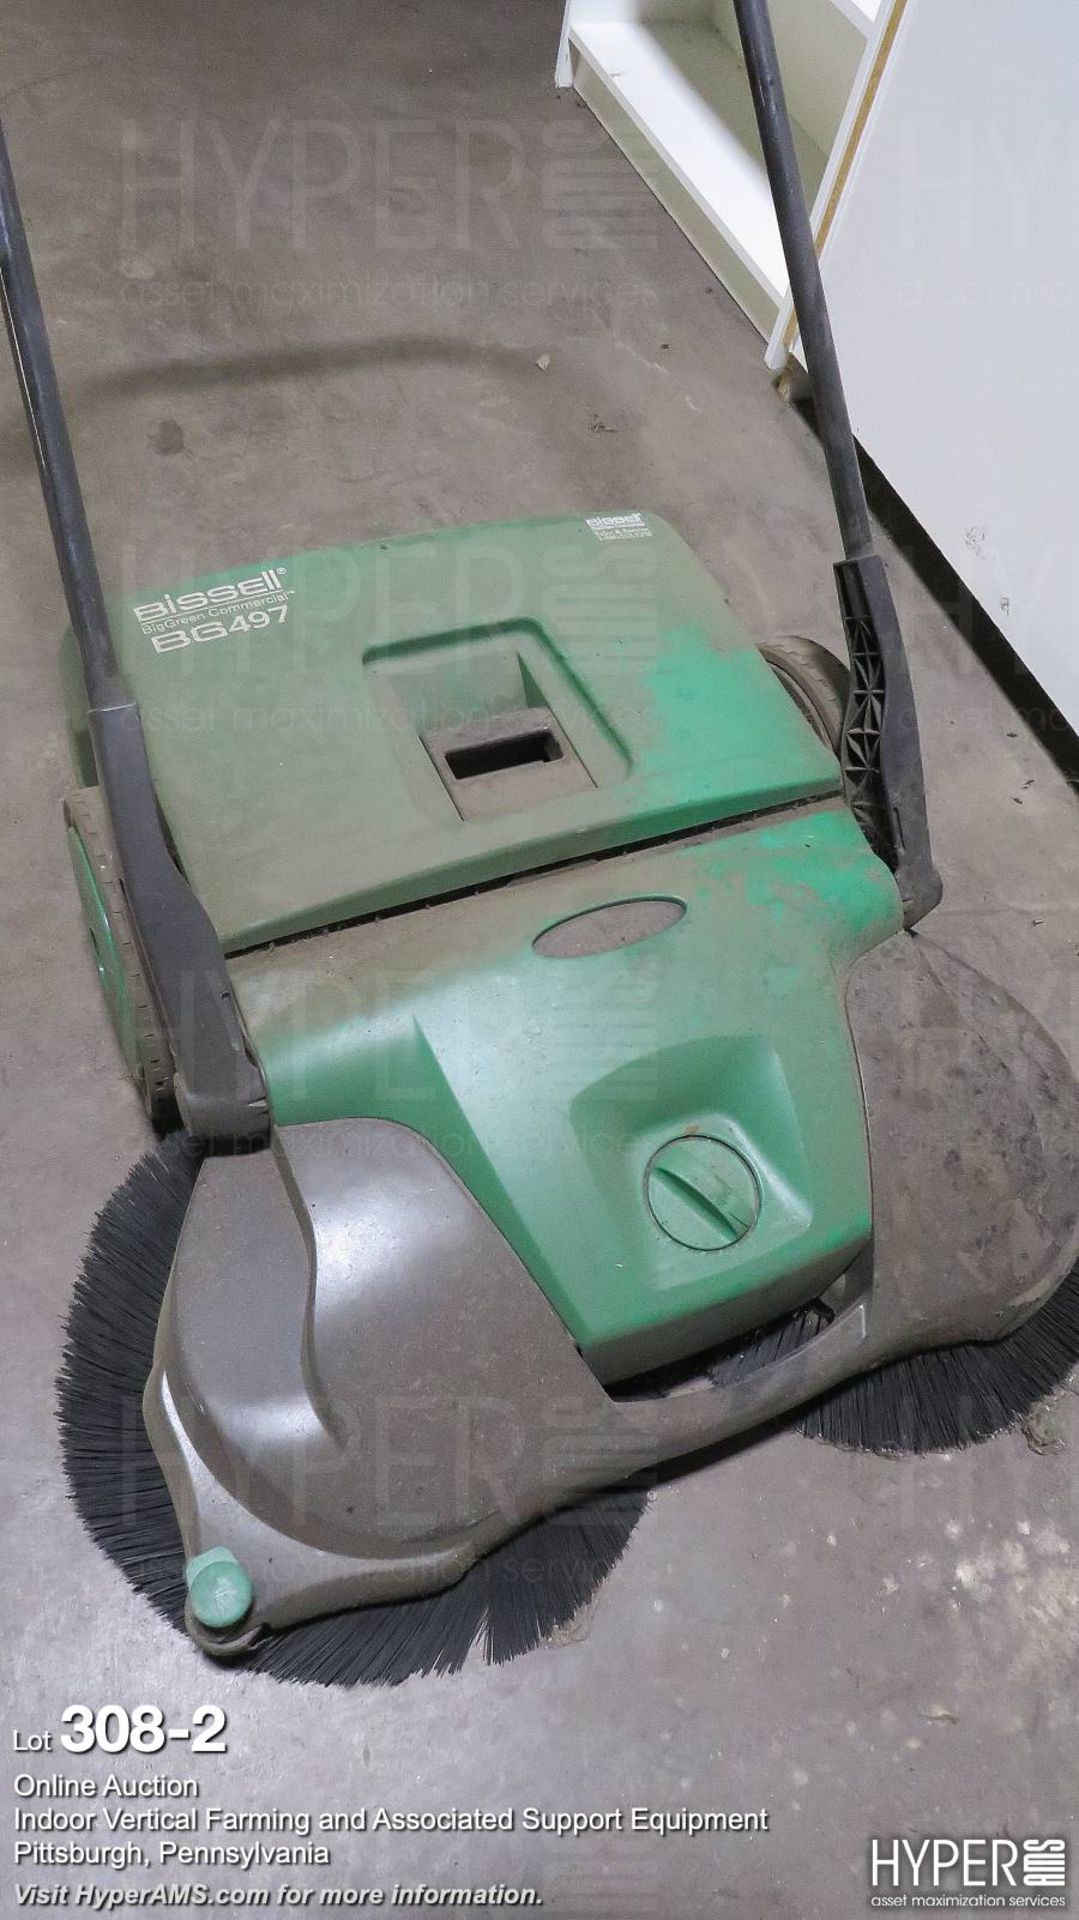 Bissell floor sweeper - Image 2 of 3